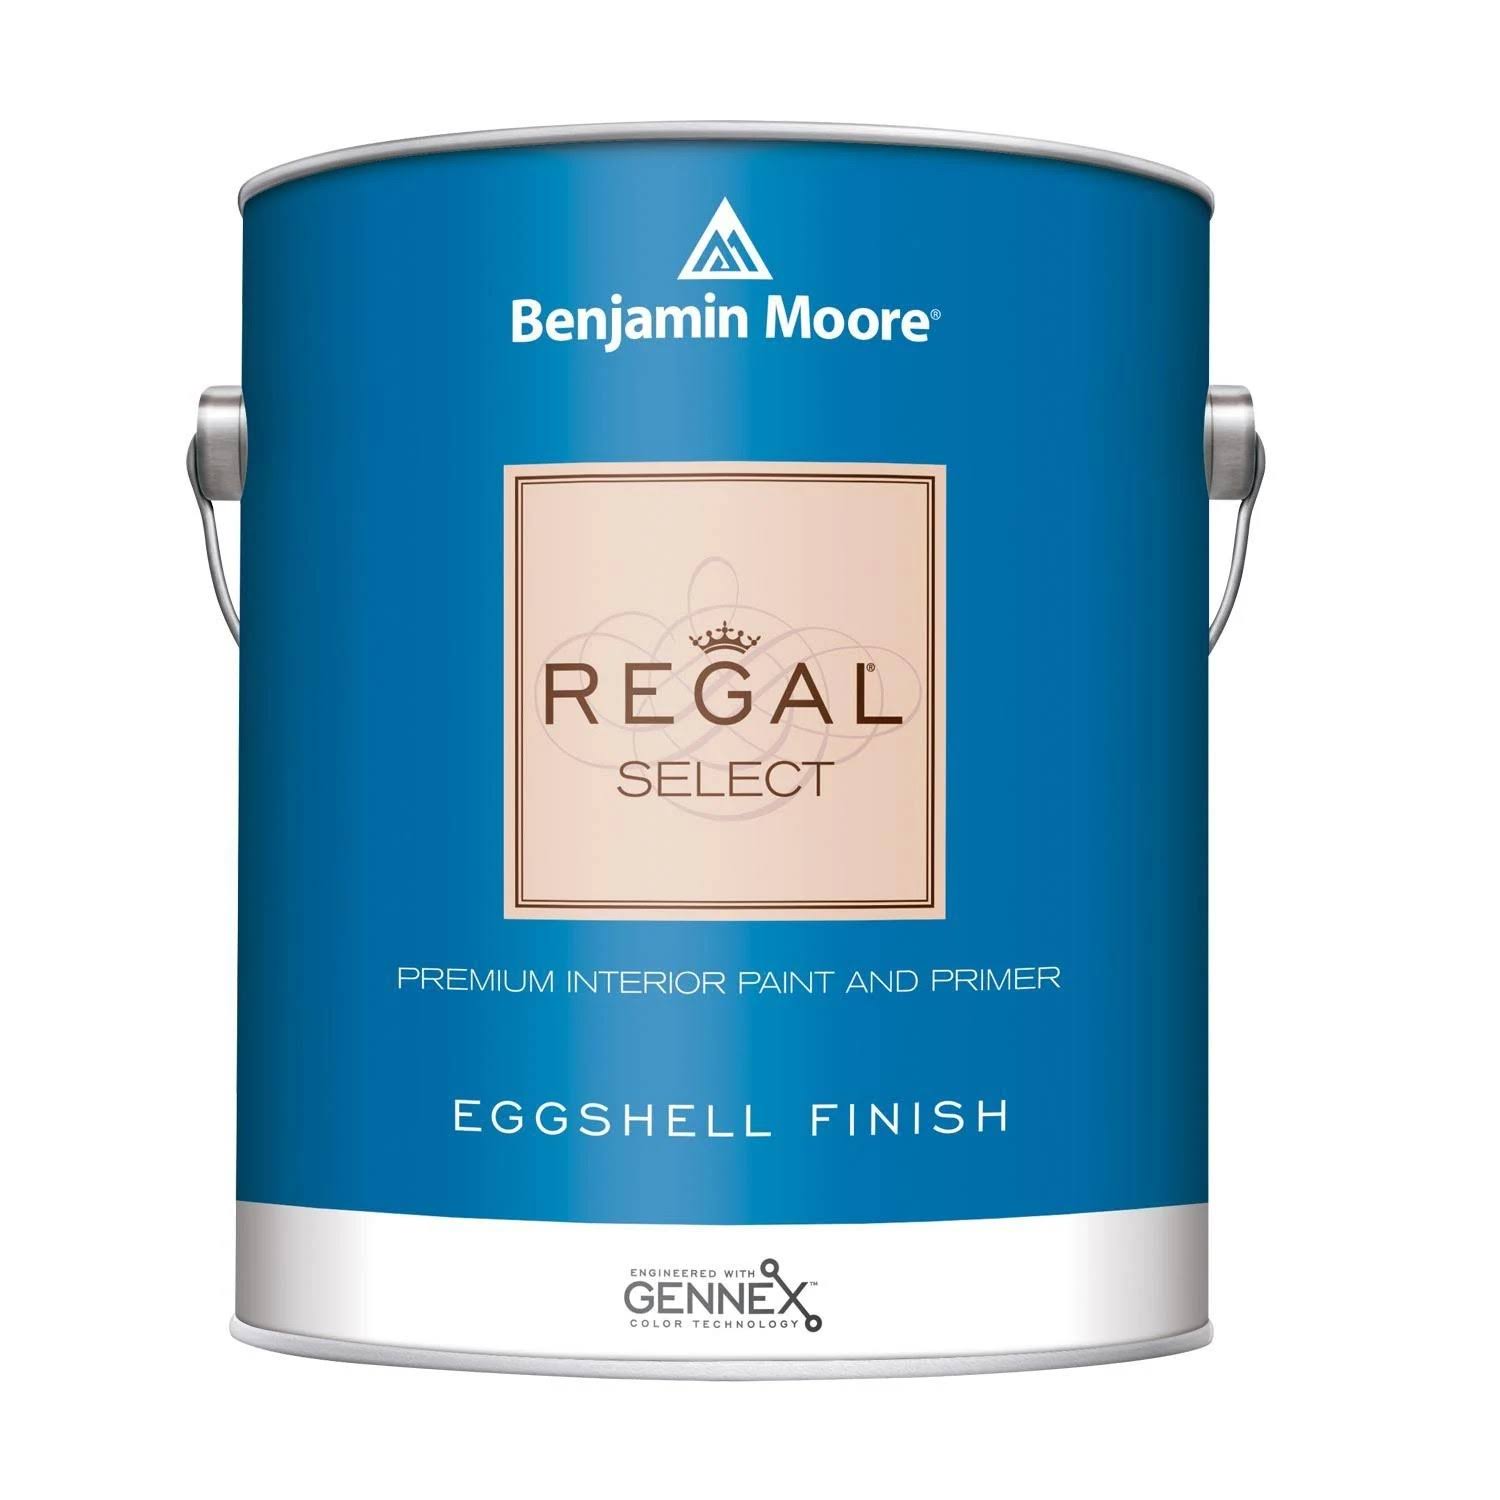 Benjamin Moore Regal Select Interior Paint - Eggshell